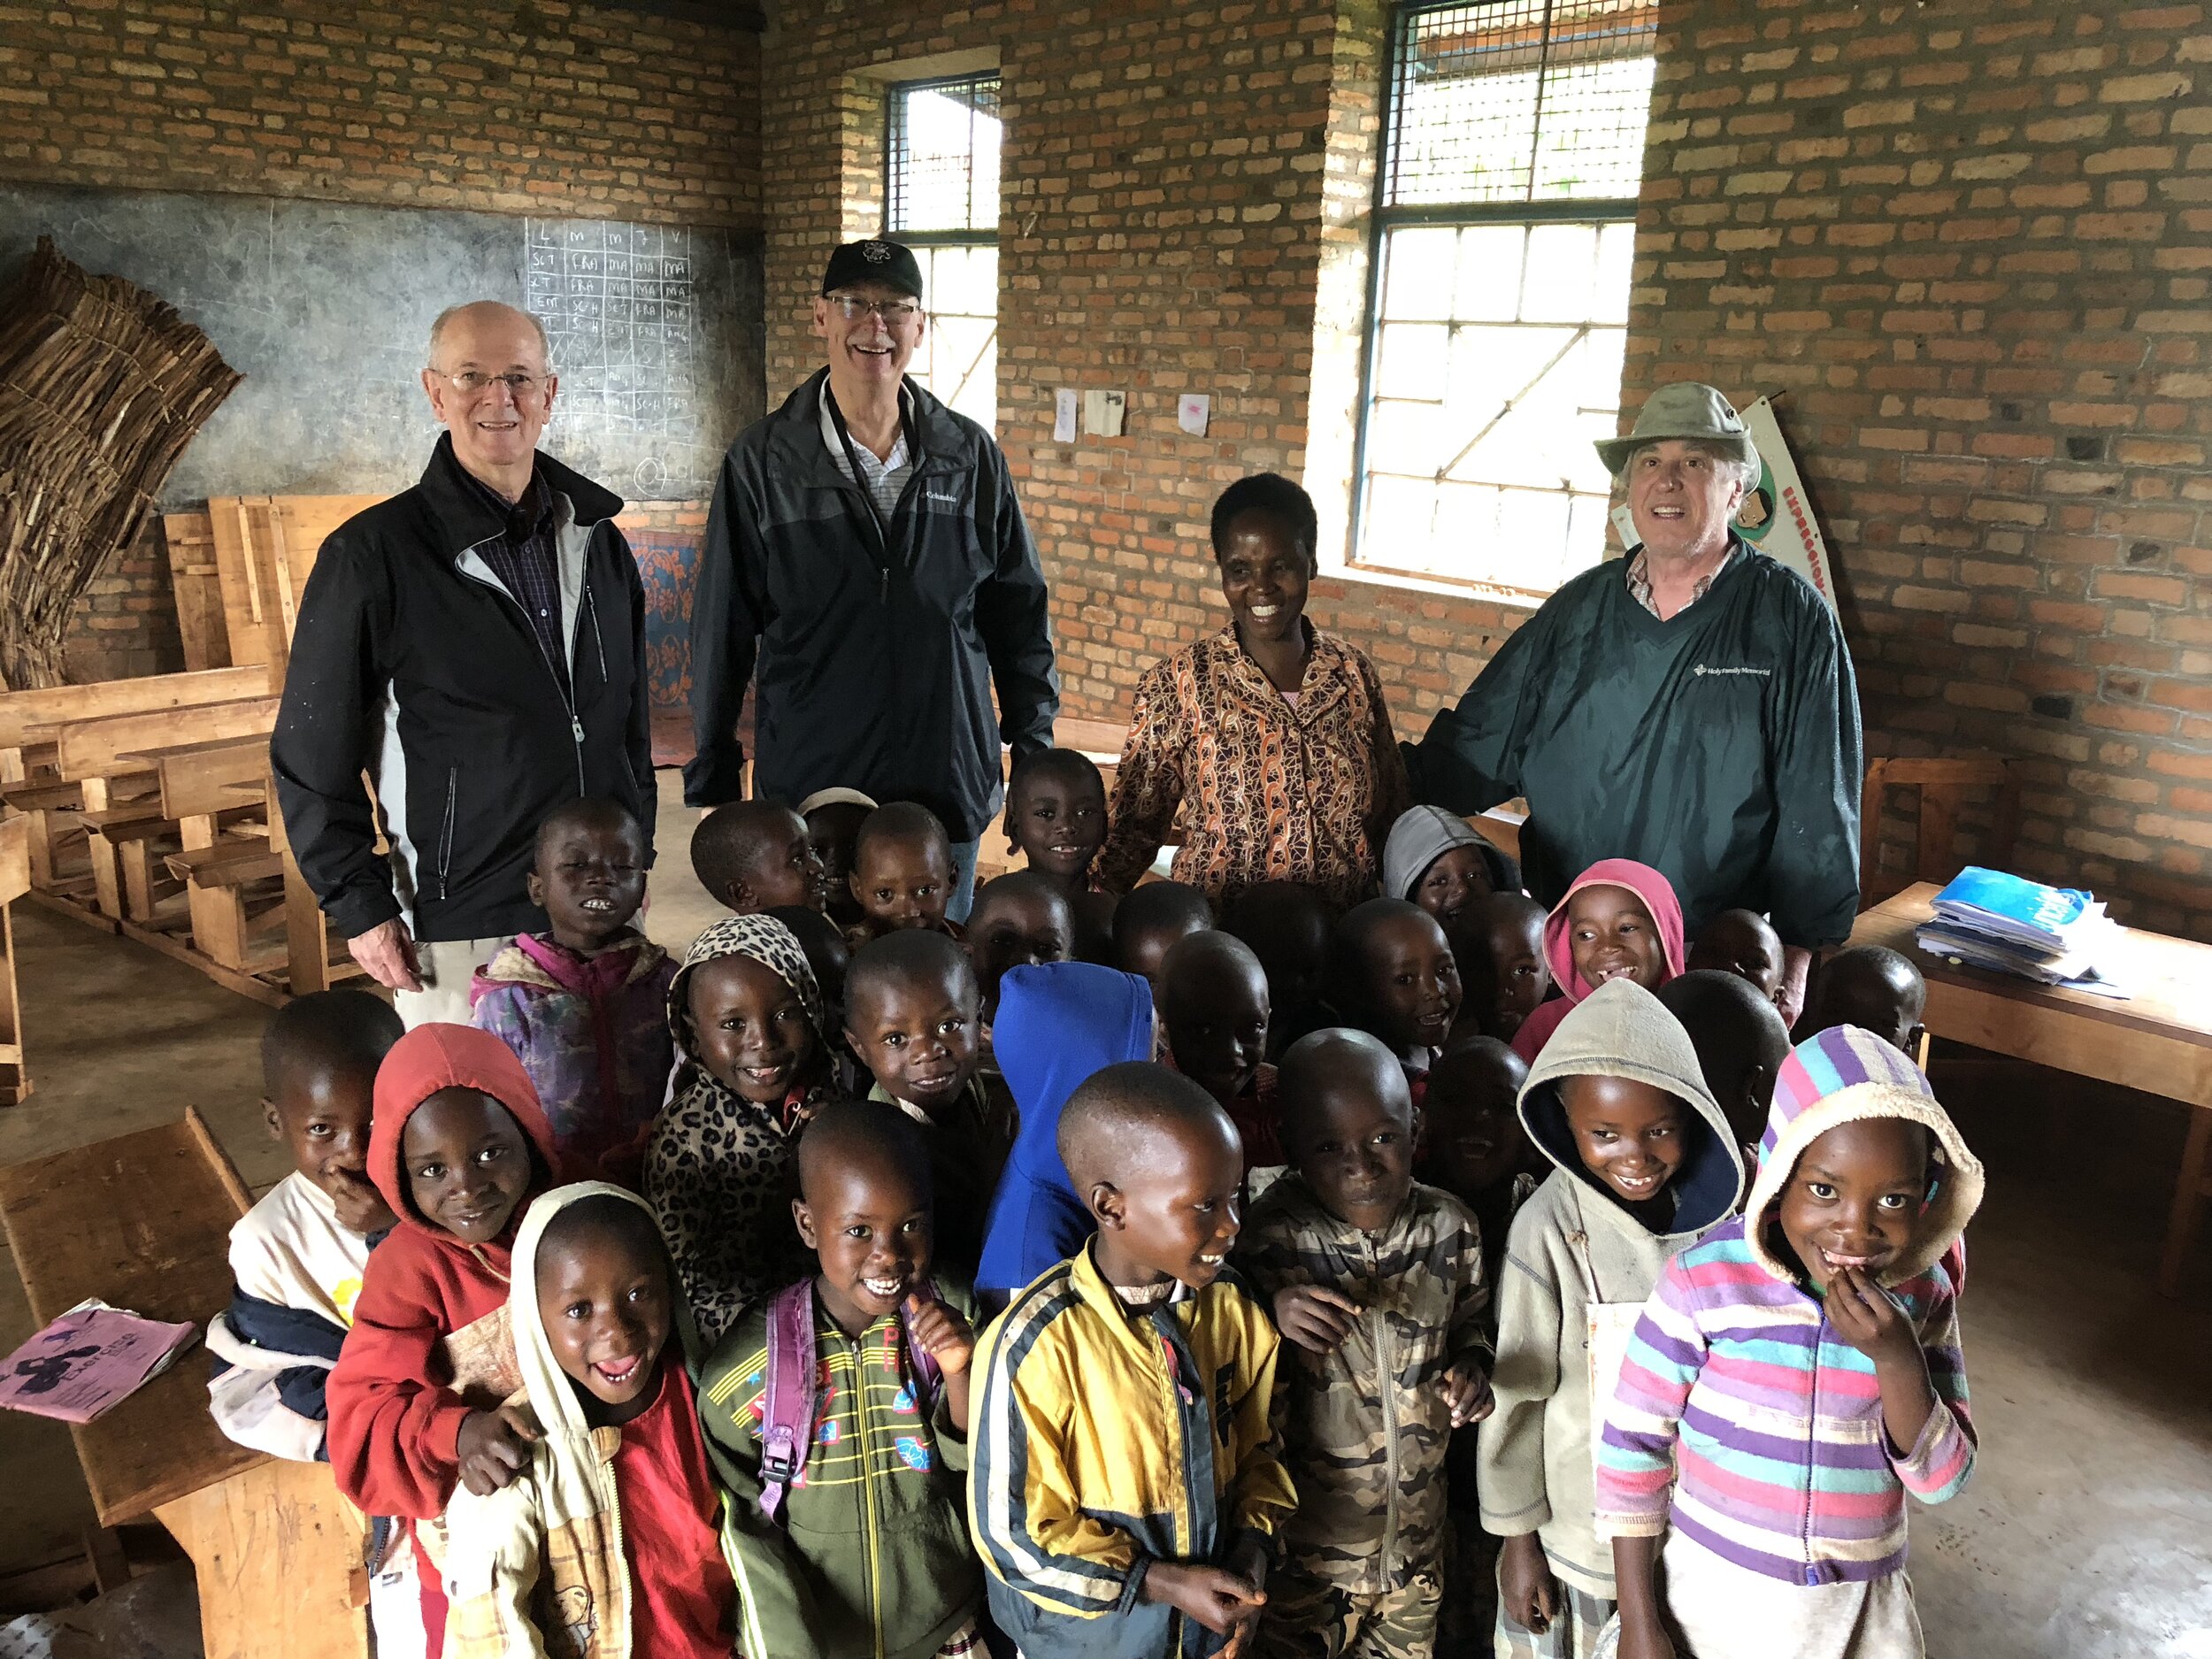  IMF team visiting a school in Kibuye, Burundi 